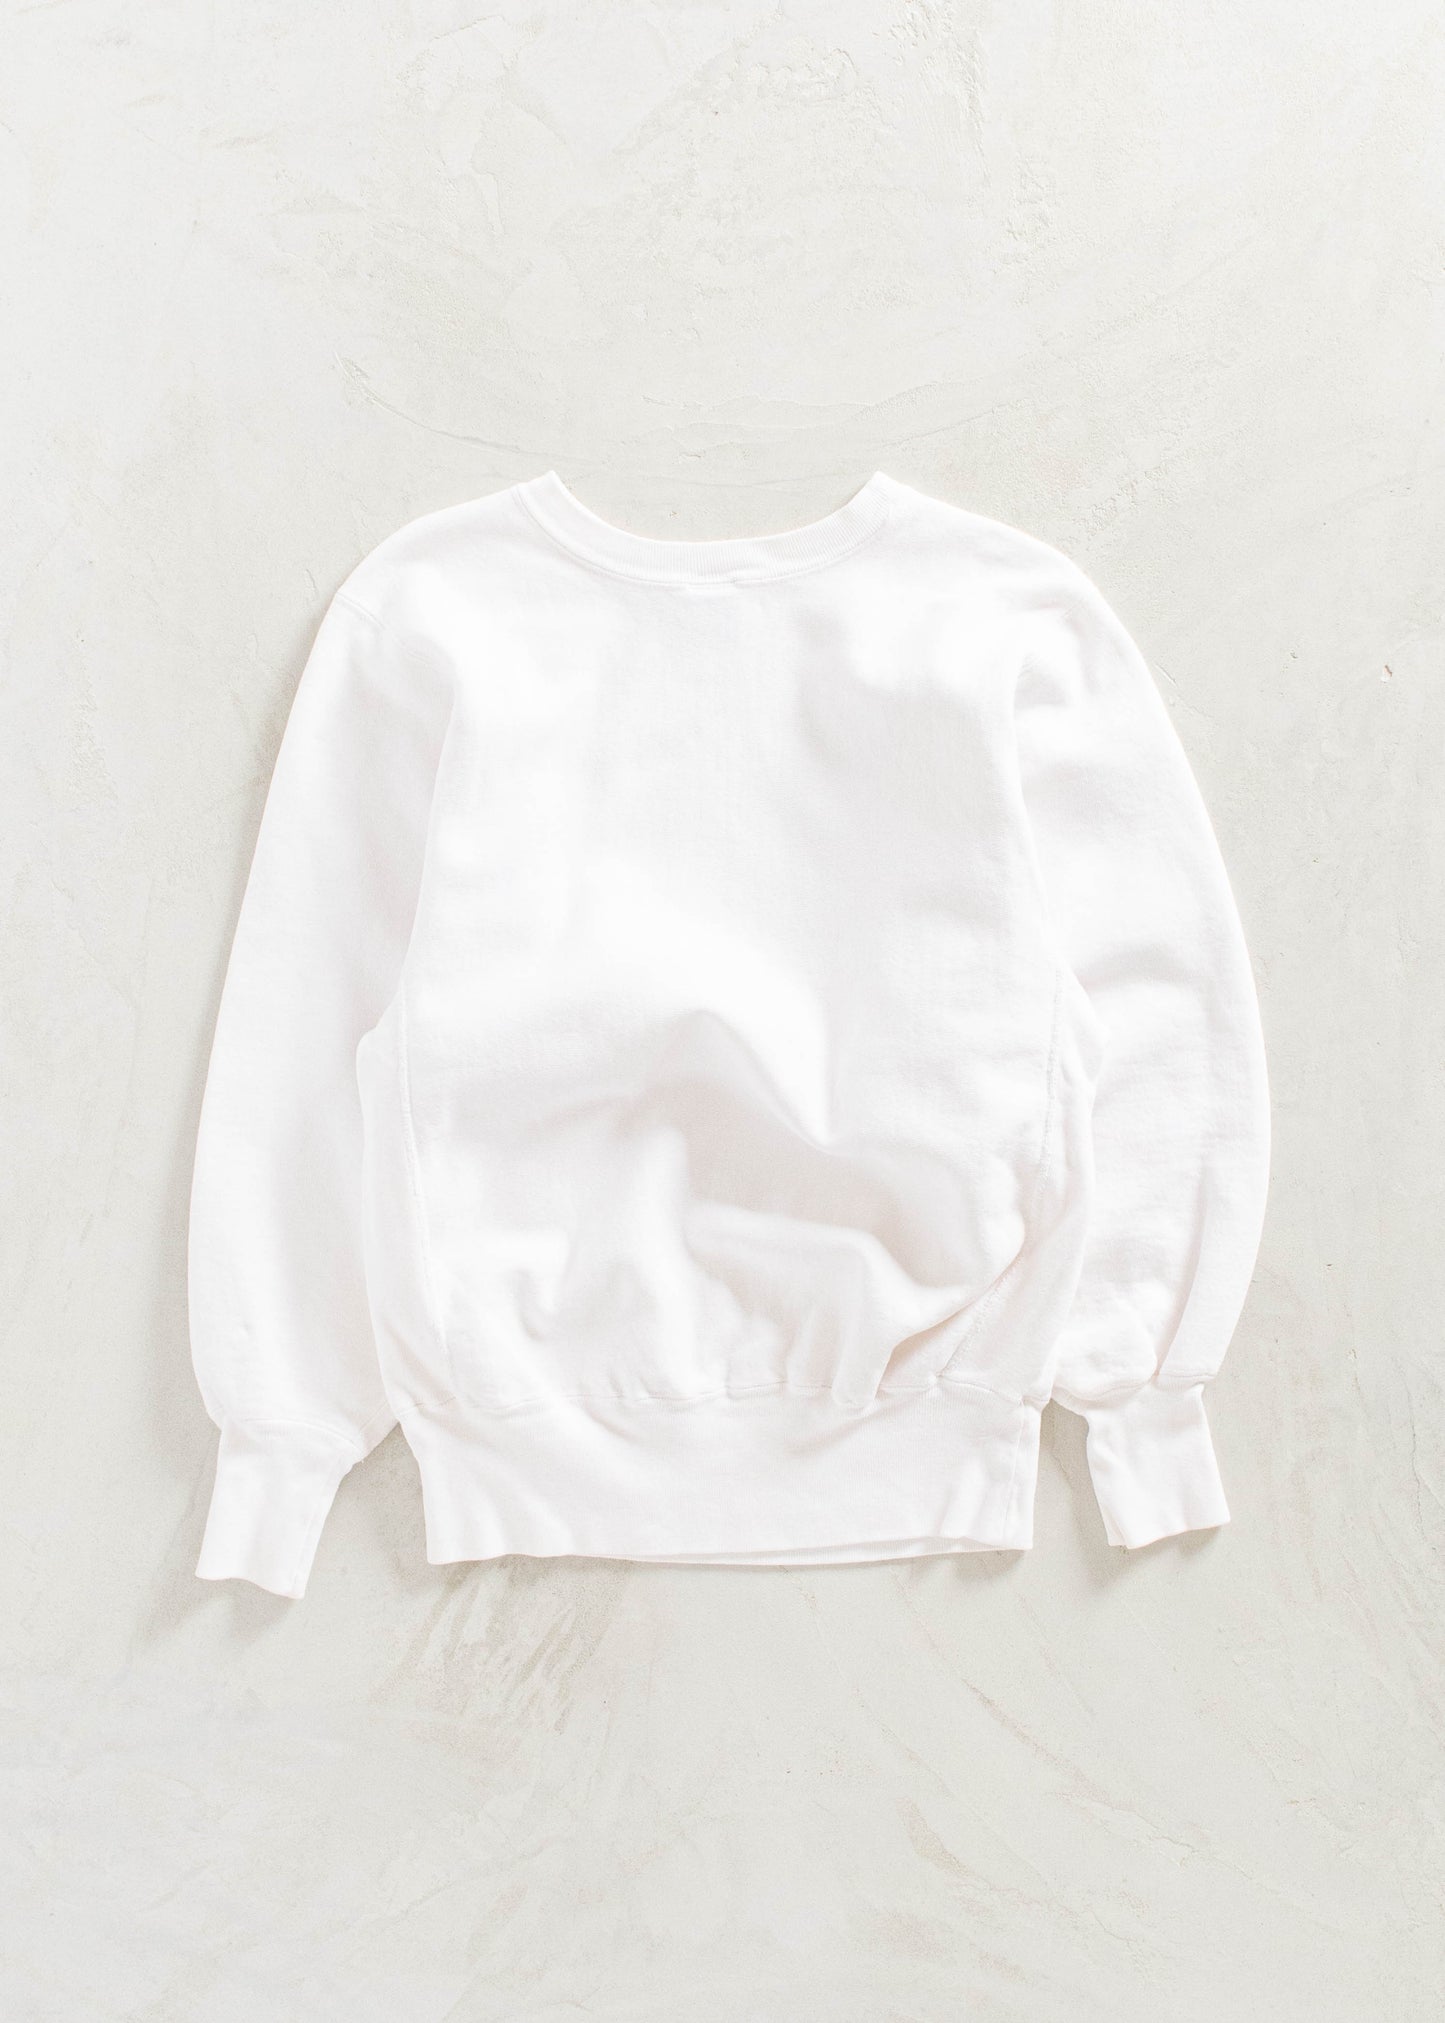 Vintage 1990s Champion Reverse Weave White Sweatshirt Size S/M